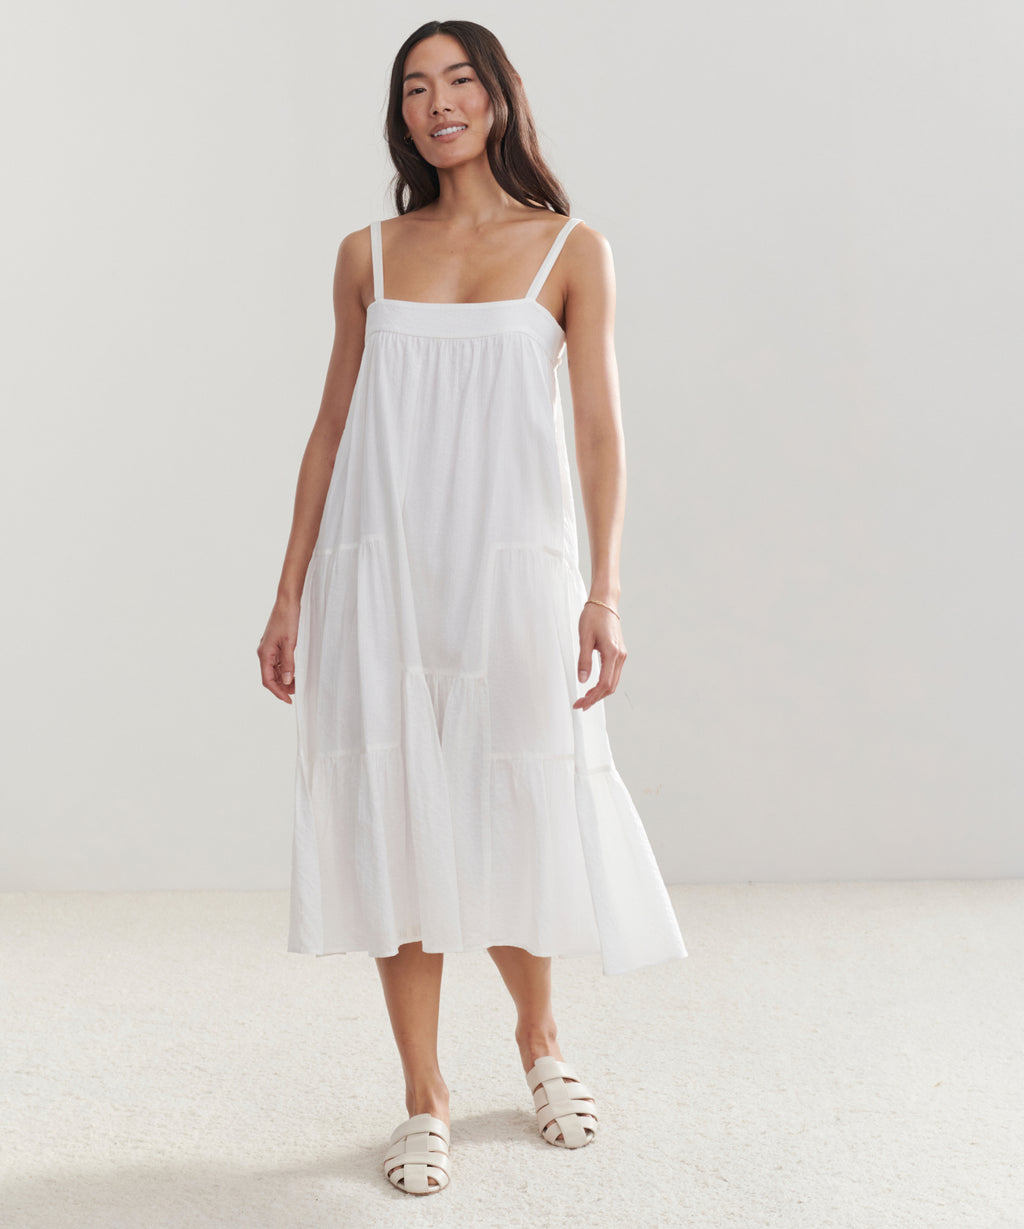 Seersucker Summer Dress – Jenni Kayne